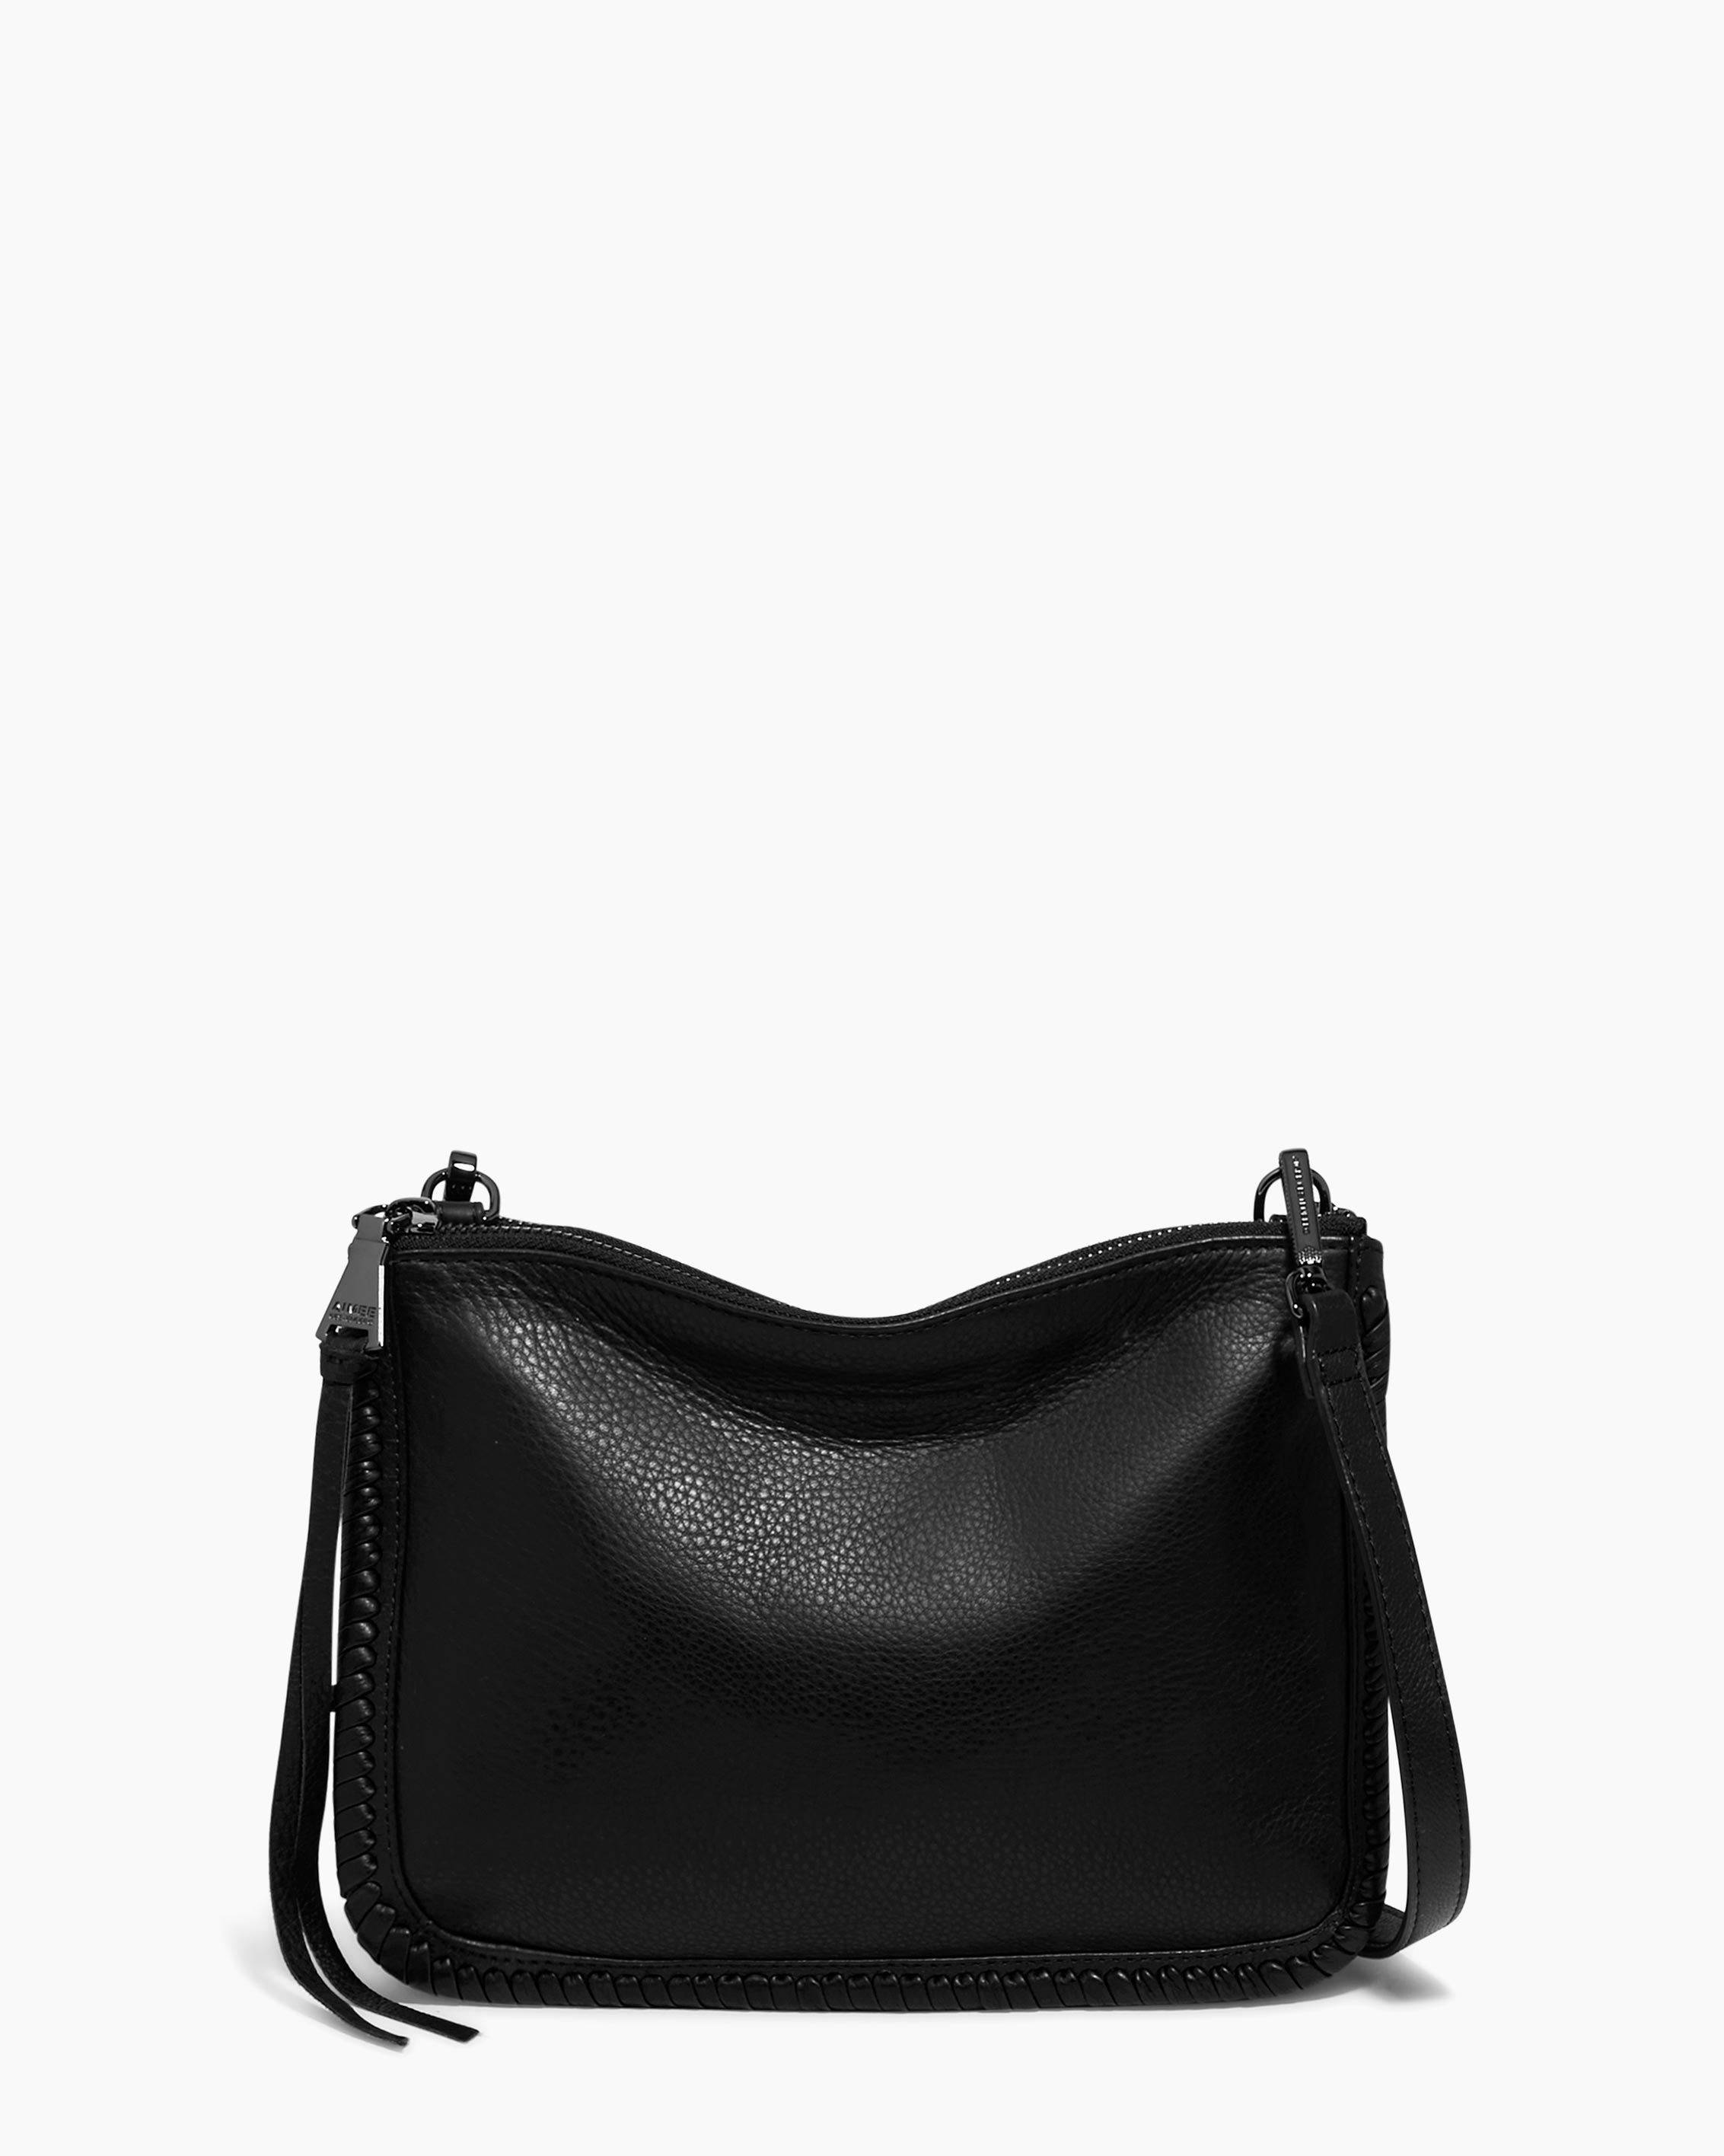 Aimee Kestenberg Women's Famous Double Zip Leather Crossbody Bag